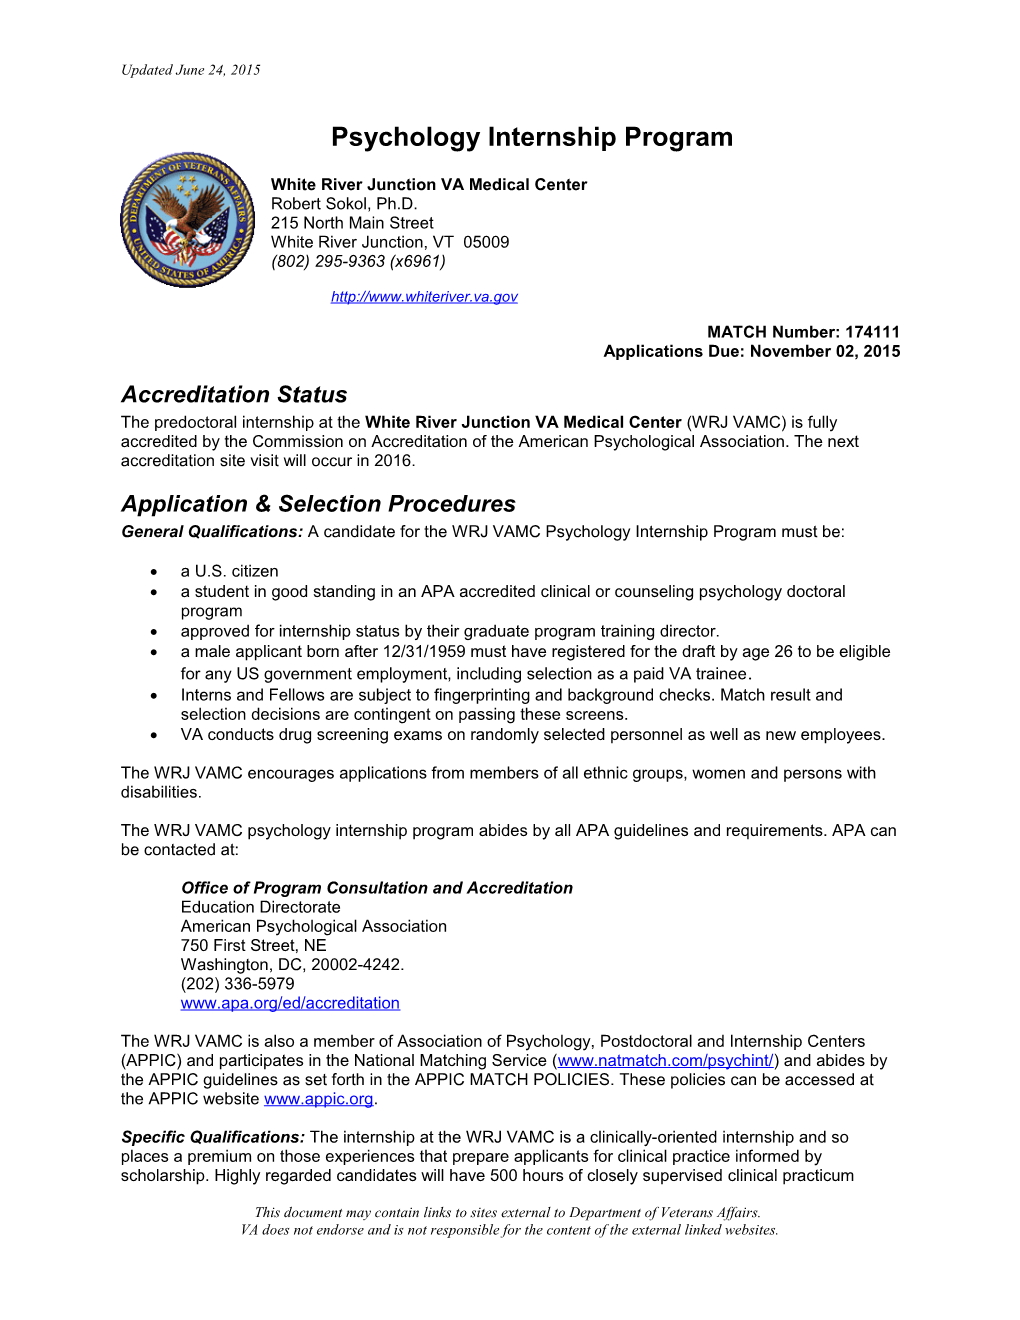 VA White River Junction Psychologyinternship - VA - U.S. Department of Veterans Affairs